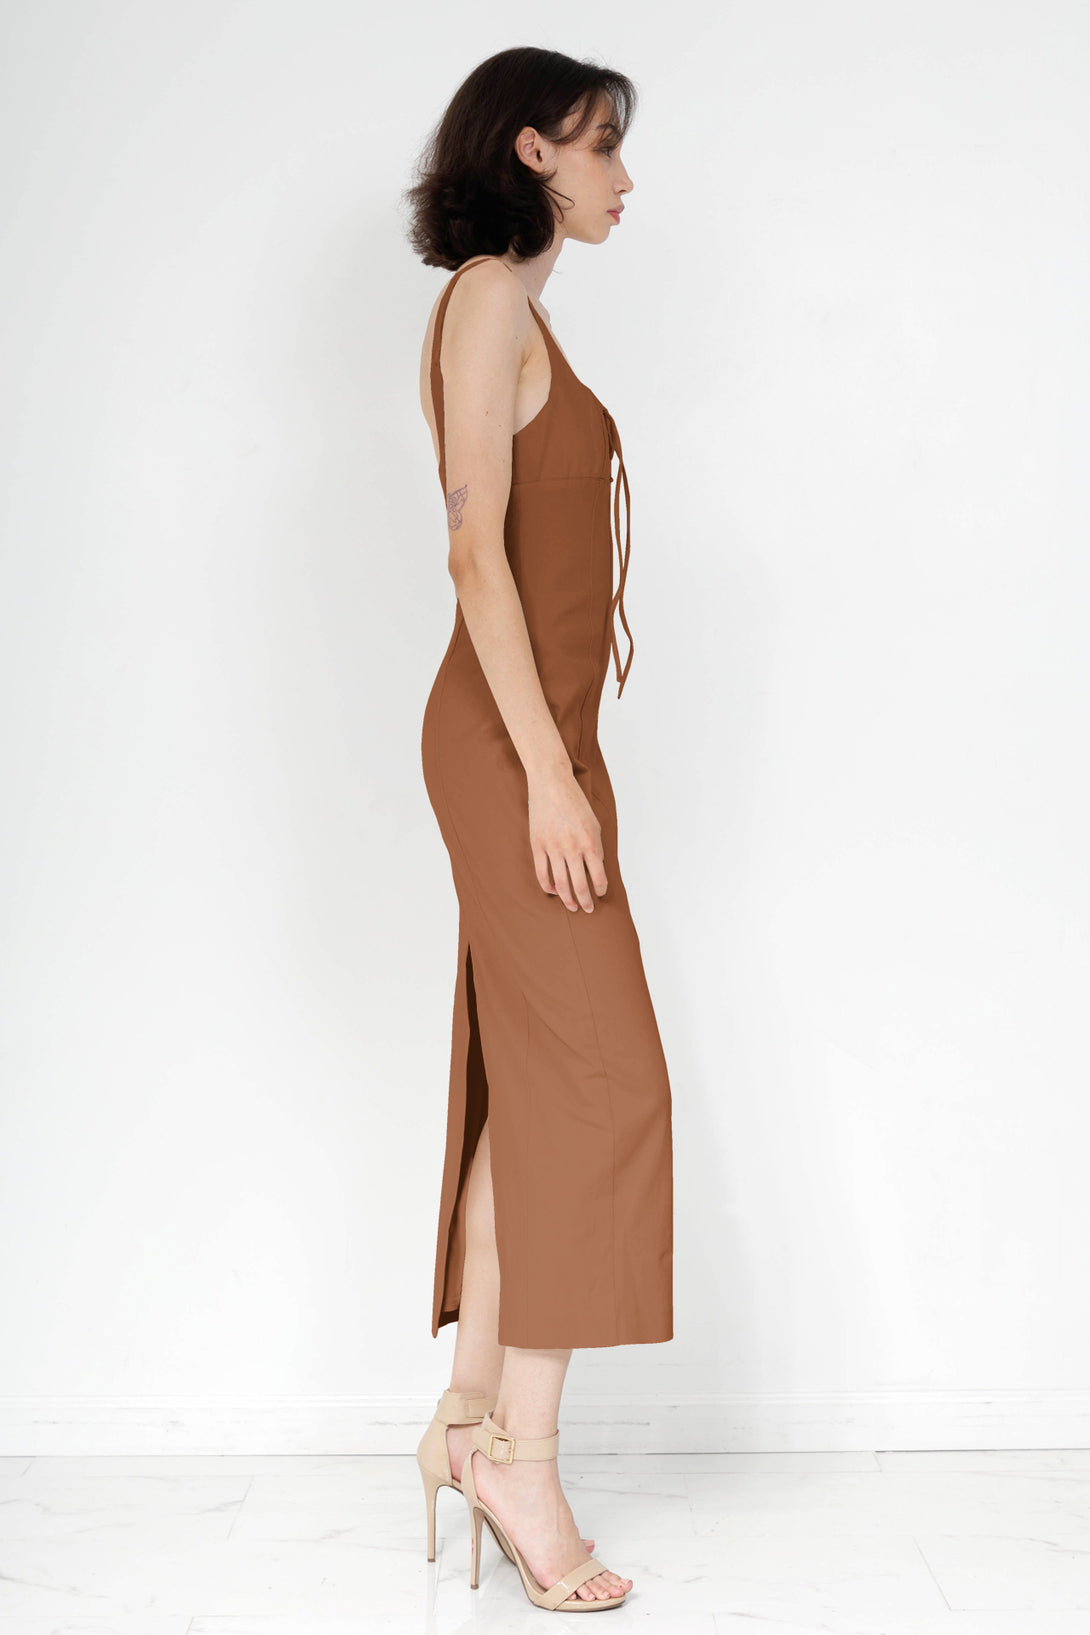 elegant midi dress, HT 360 Collective, midi party dresses for women, lace up front dress, midi dress brown,